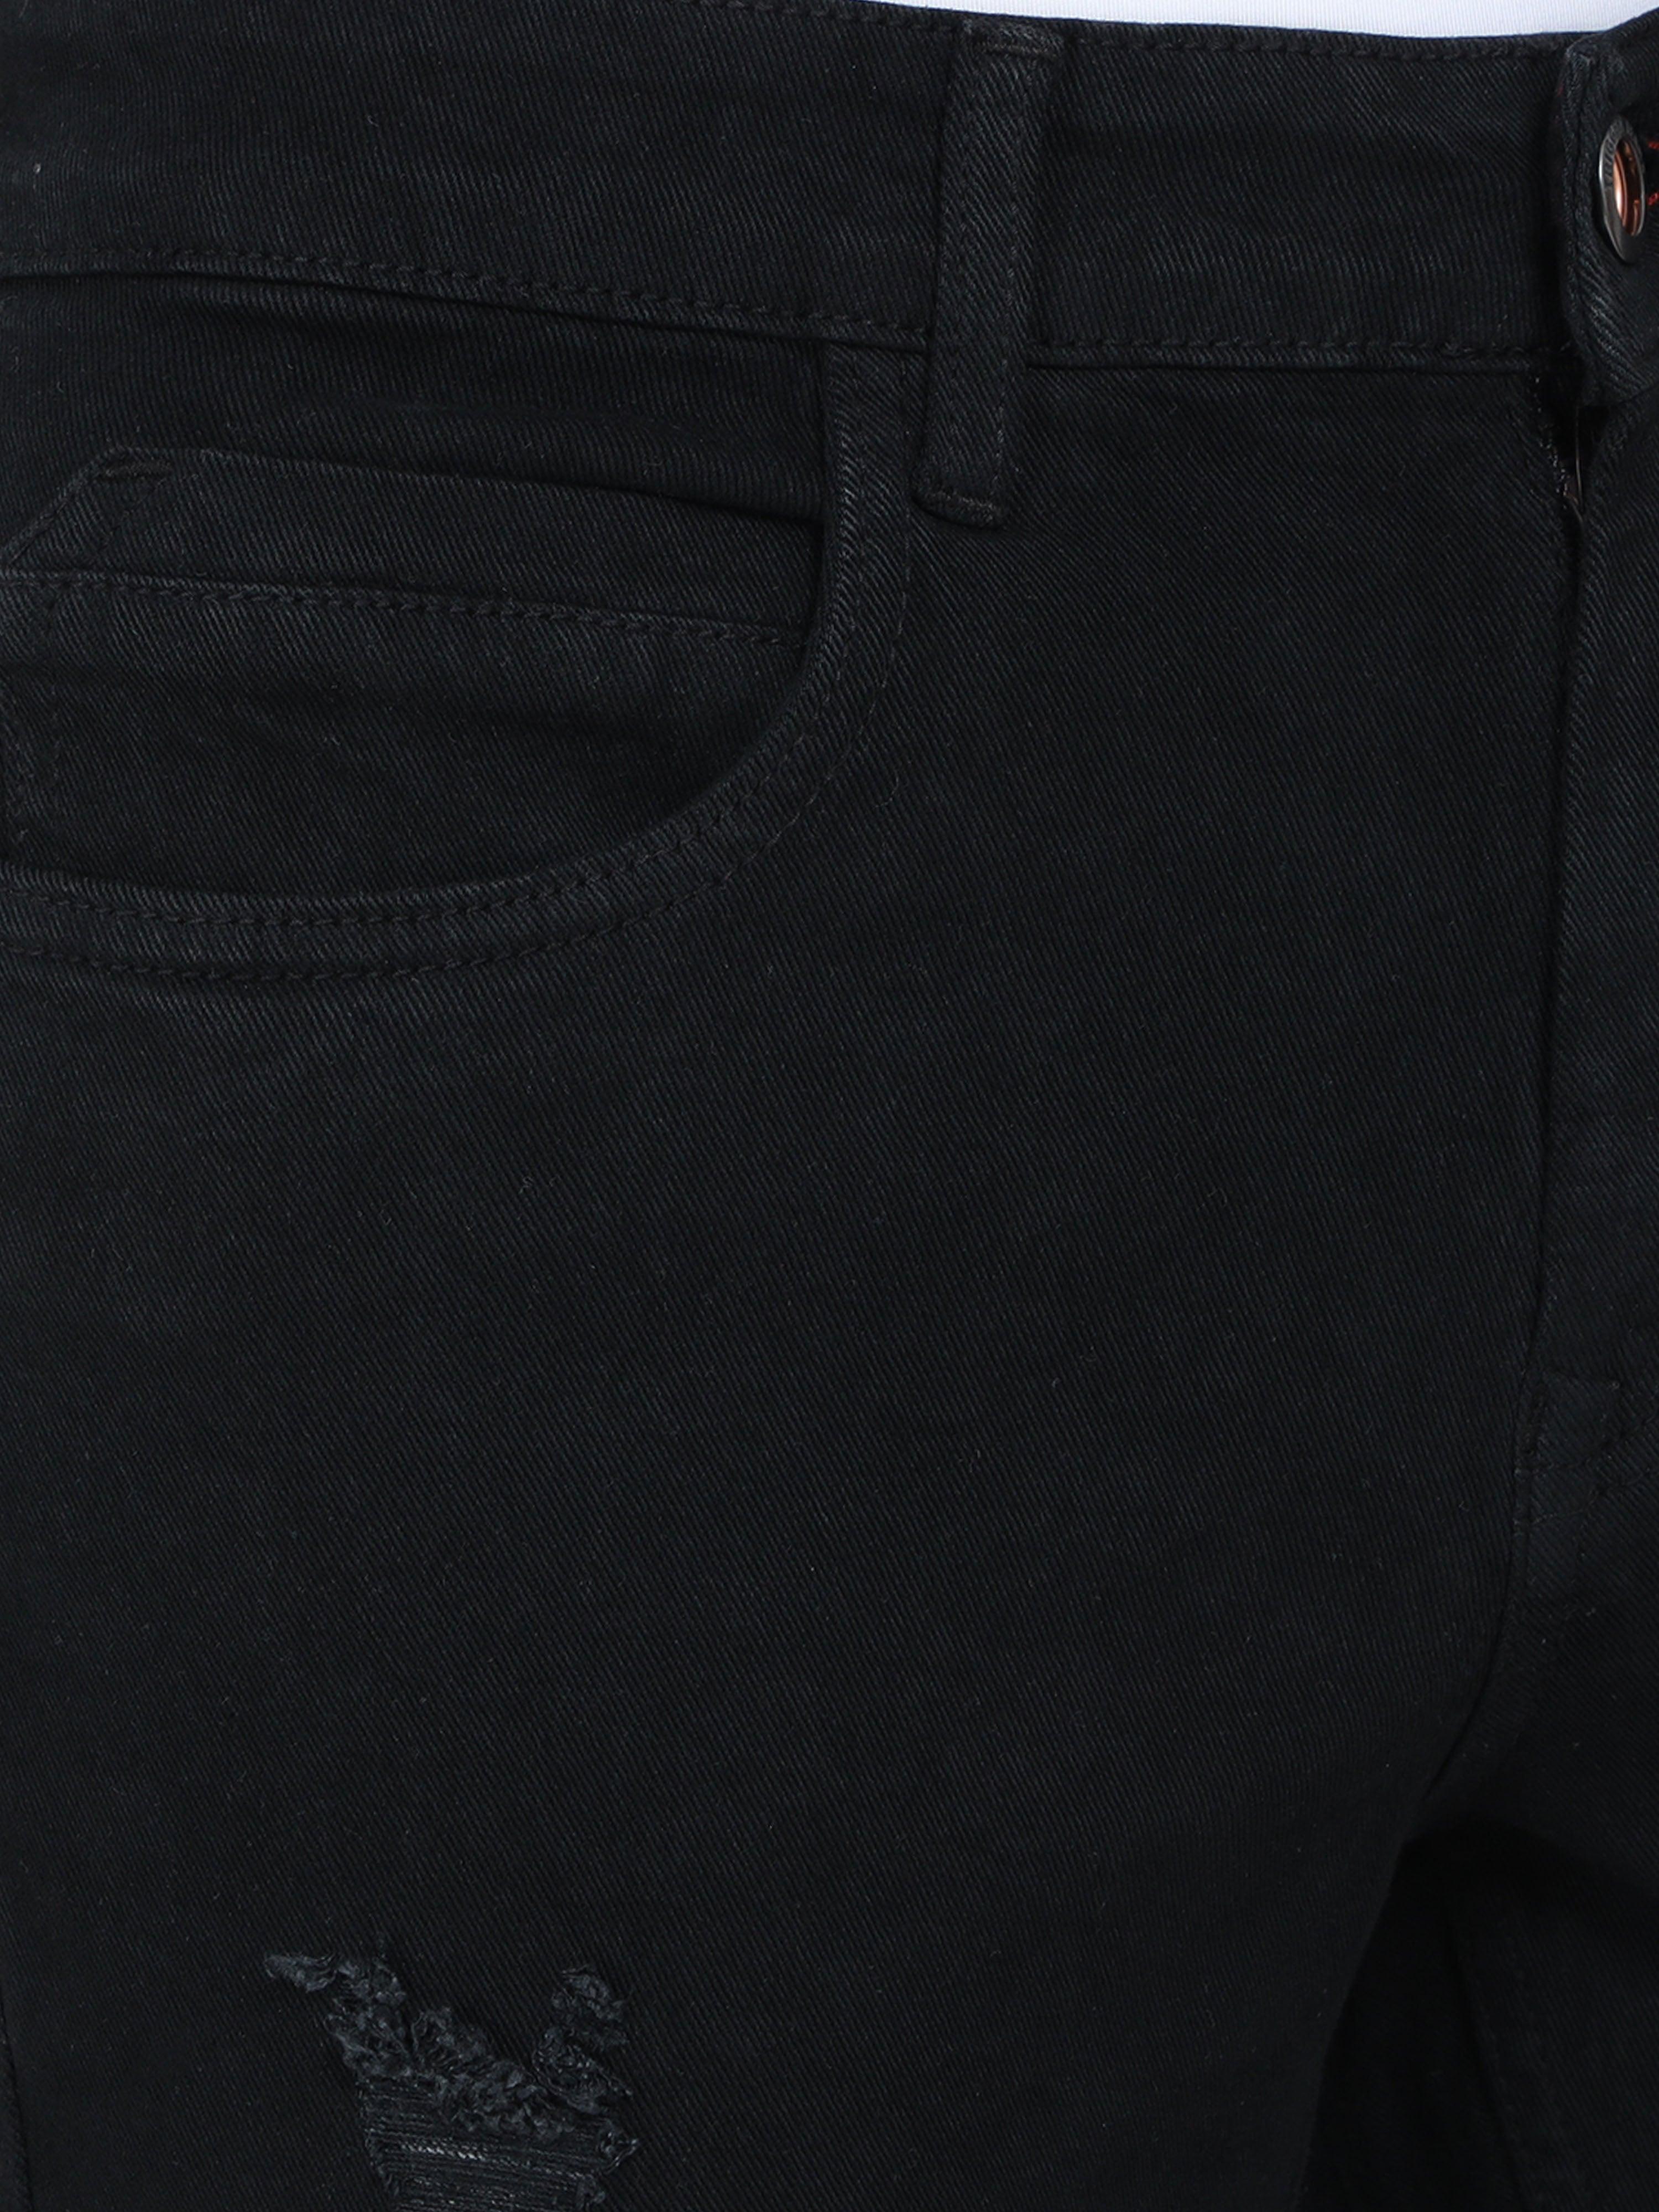 Men's Slim Fit Distressed Jeans - Black